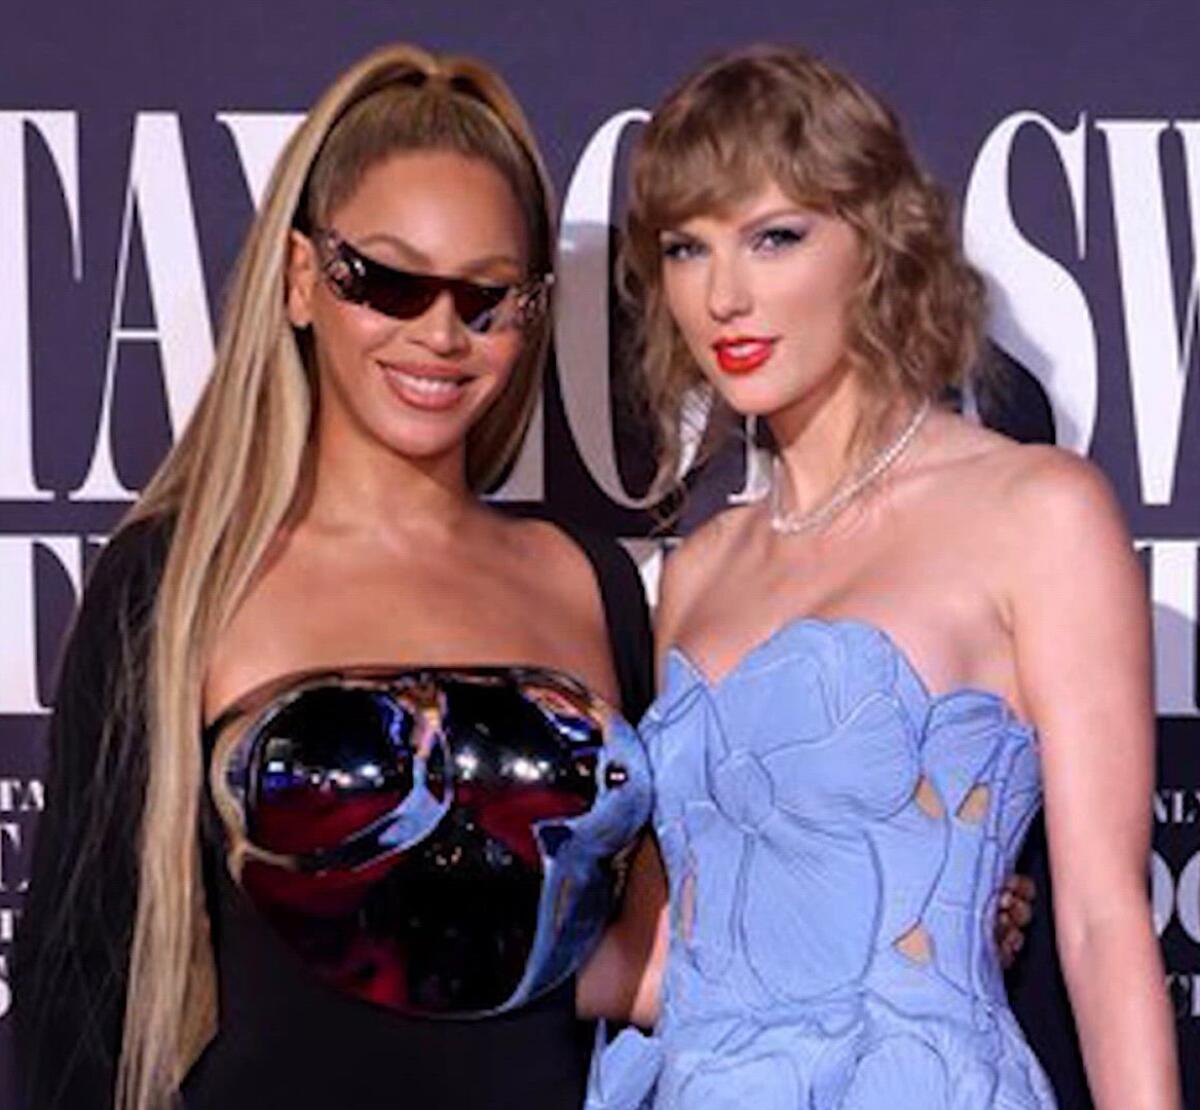 Beyoncé’s ‘Cowboy Carter’ does not feature Taylor Swift, despite Swiftie speculation